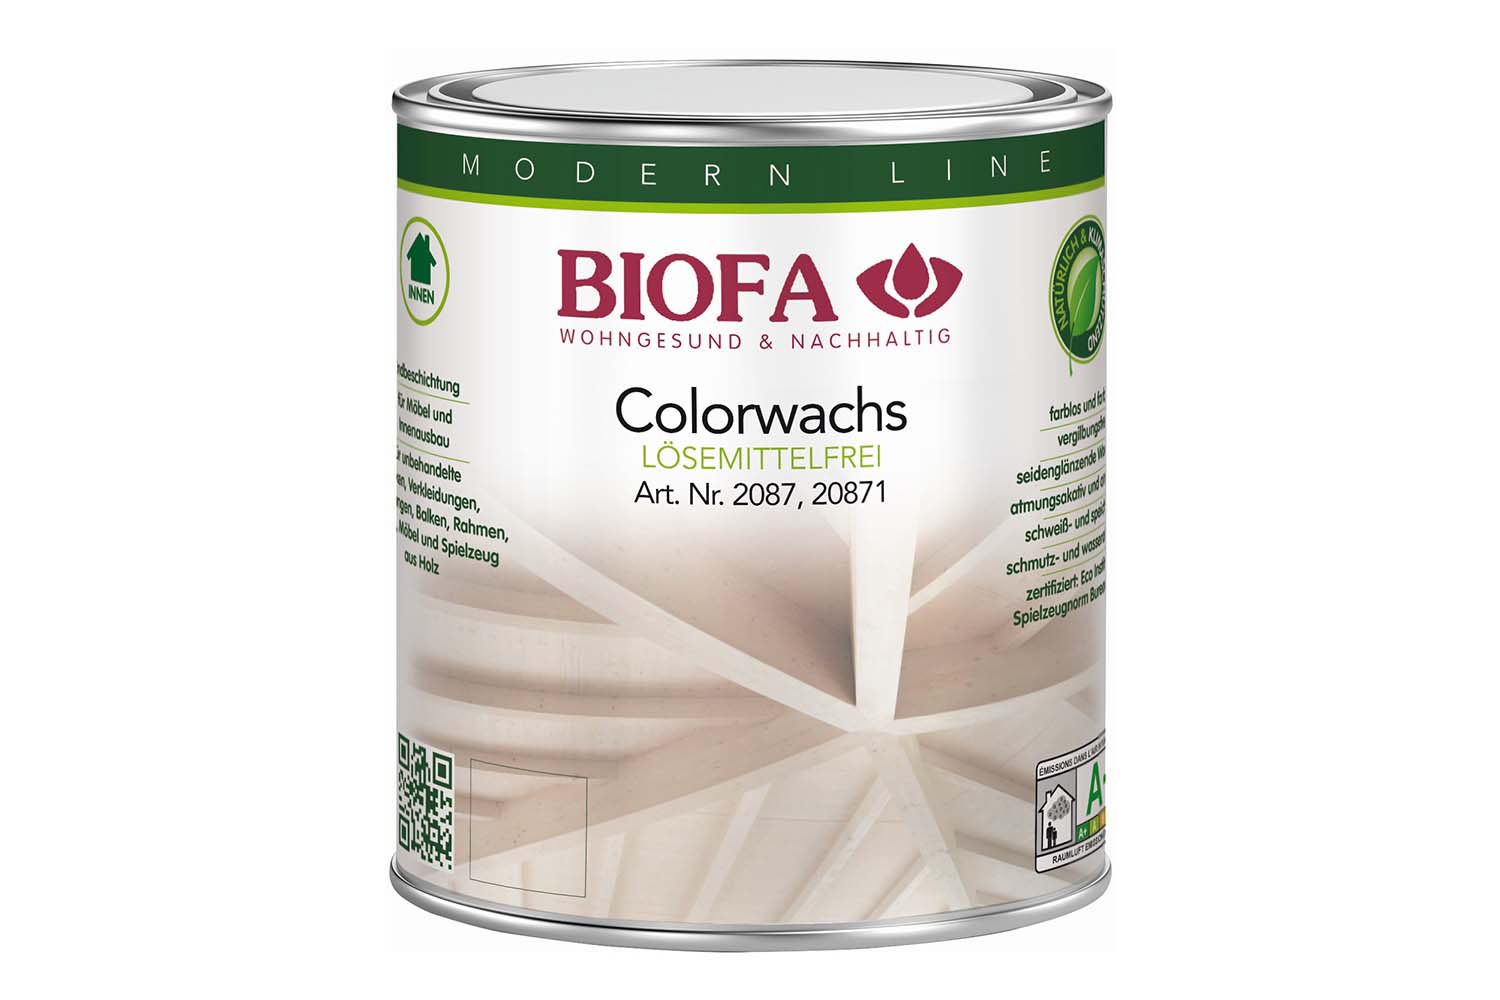 Biofa Colorwachs, lösemittelfrei